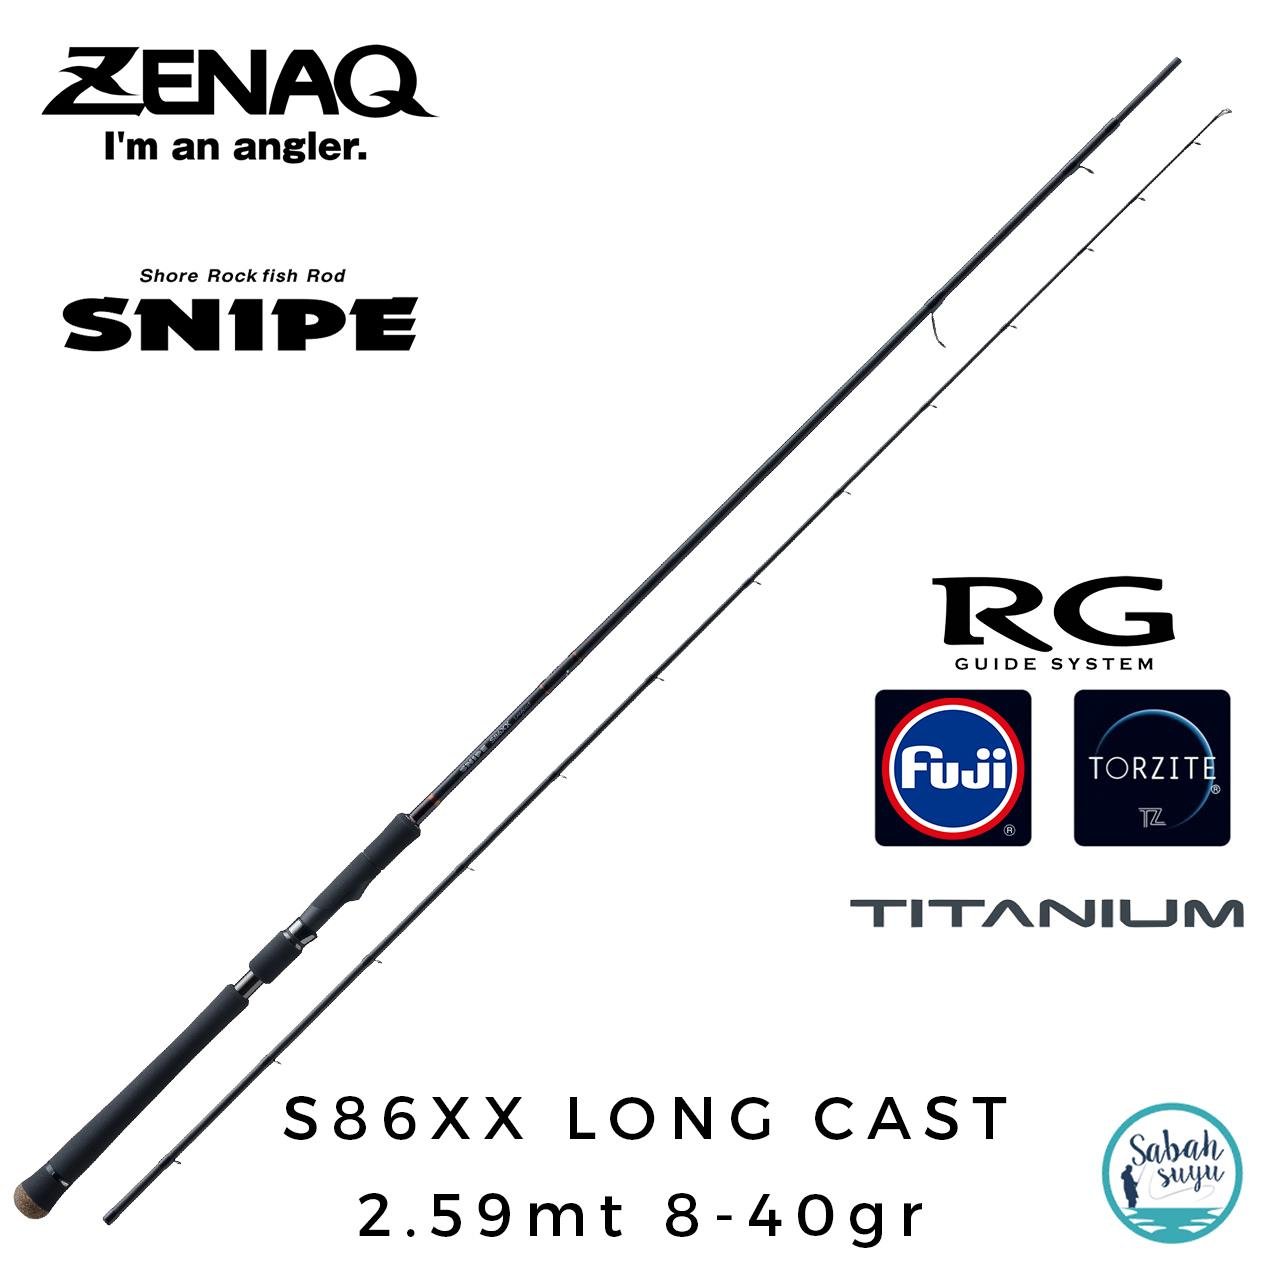 Zenaq Snipe S86XX Long Cast (RG) 2.59mt 8-40gr Spin Kamış